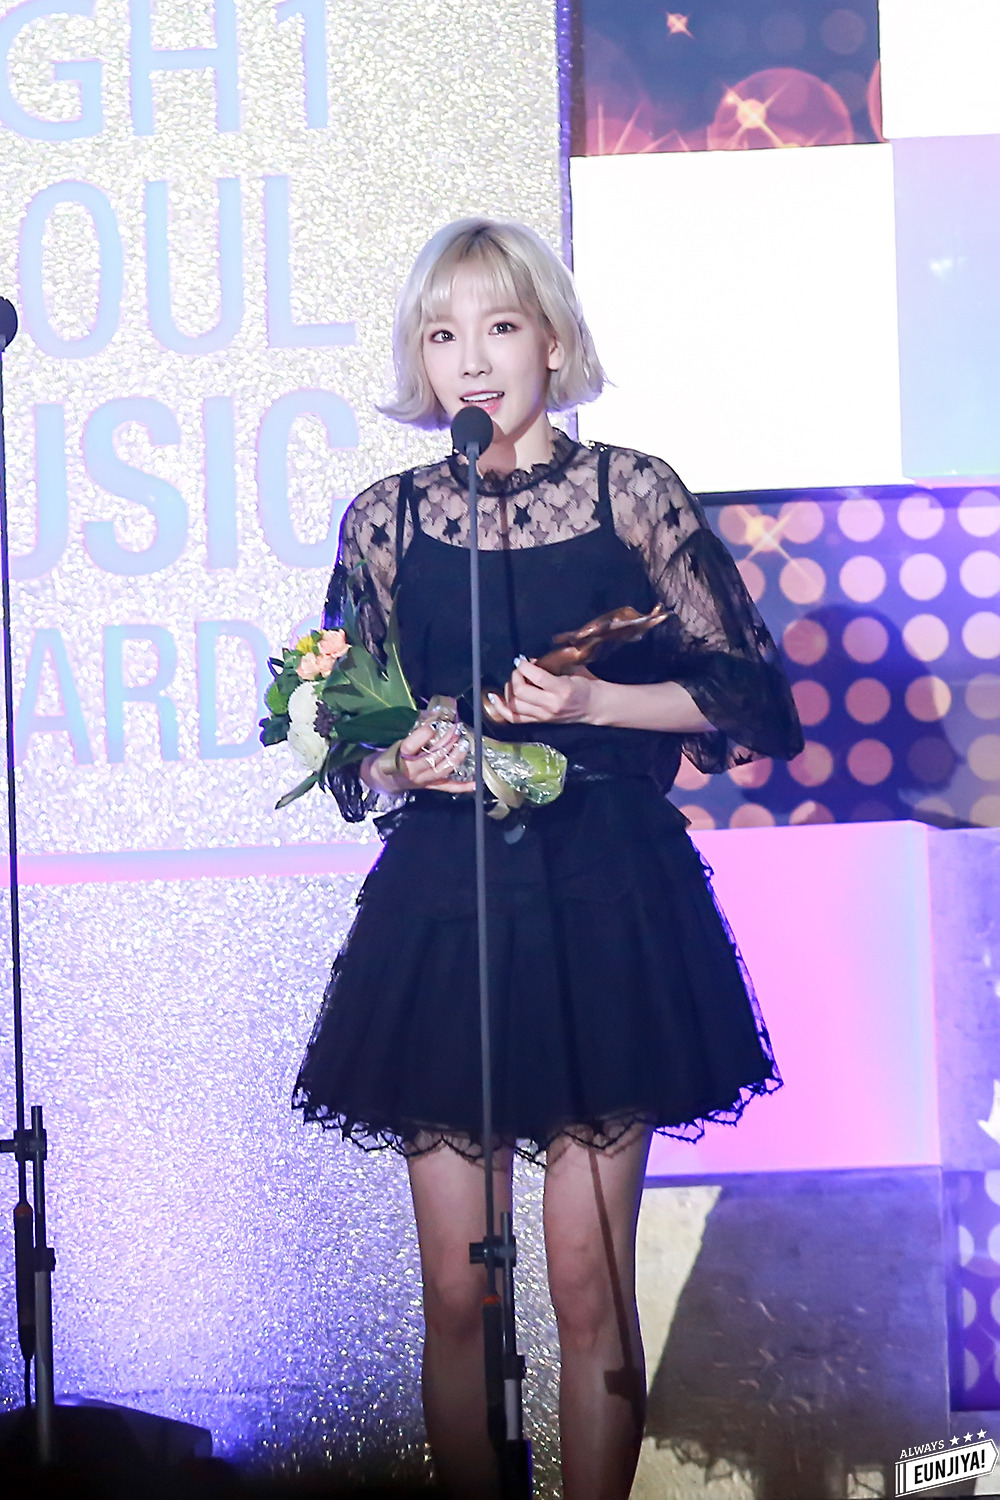 [PIC][14-01-2016]TaeYeon tham dự “25th High1 Seoul Music Awards” vào tối nay - Page 2 2732FE4E56B0D5A80A526E